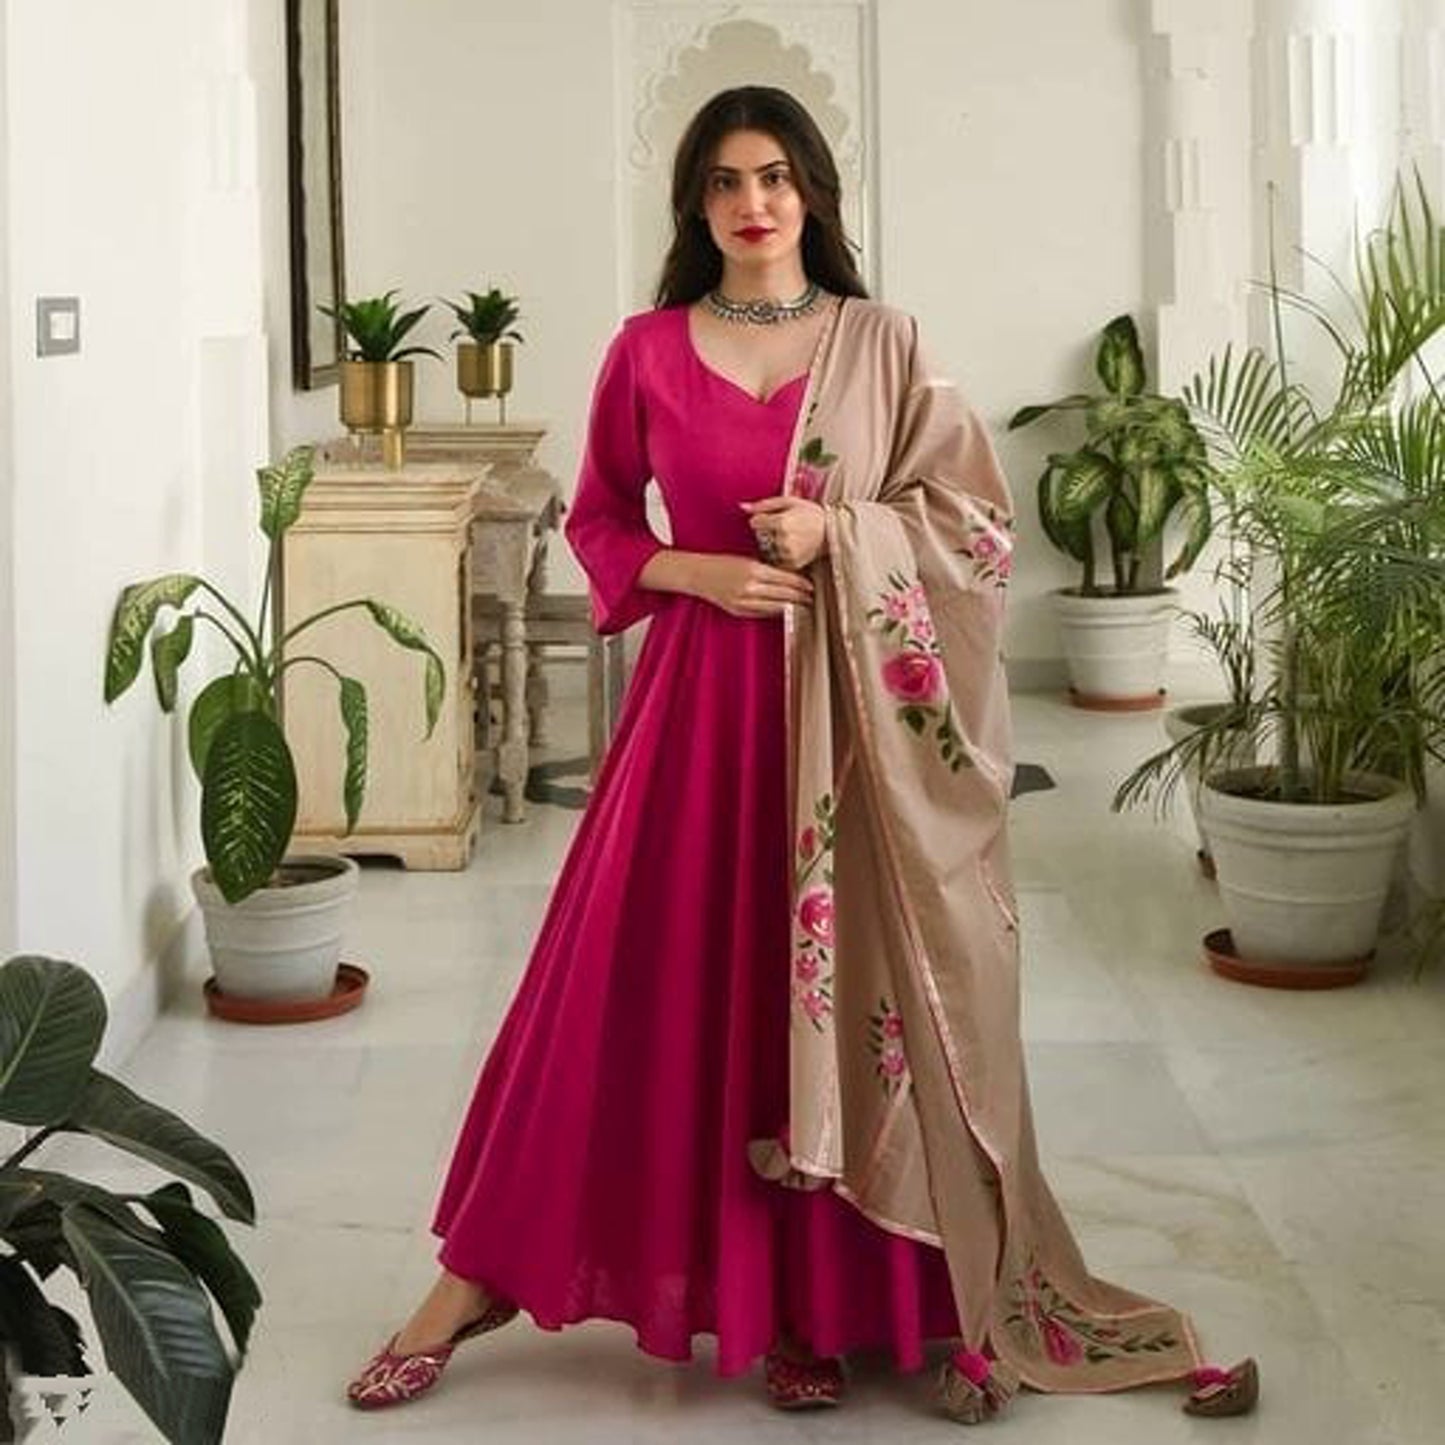 Urban Wardrobe's Women's Designer Pink Anarkali Kurta with Contrasting Dupatta